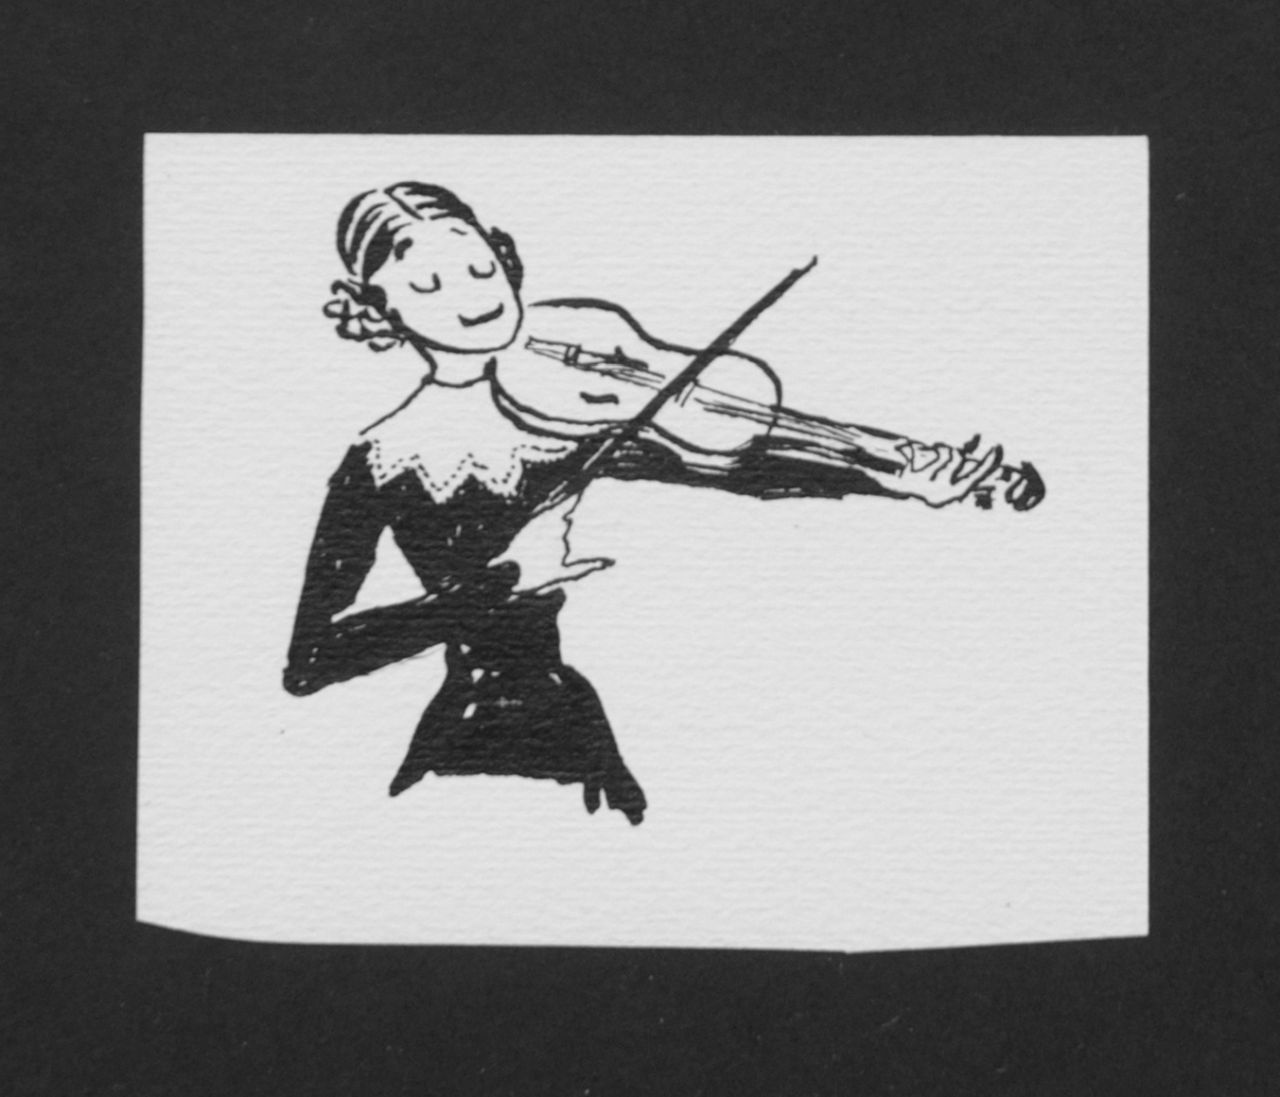 Oranje-Nassau (Prinses Beatrix) B.W.A. van | Beatrix Wilhelmina Armgard van Oranje-Nassau (Prinses Beatrix), Violinist, pencil and black ink on paper 9.7 x 7.6 cm, executed August 1960